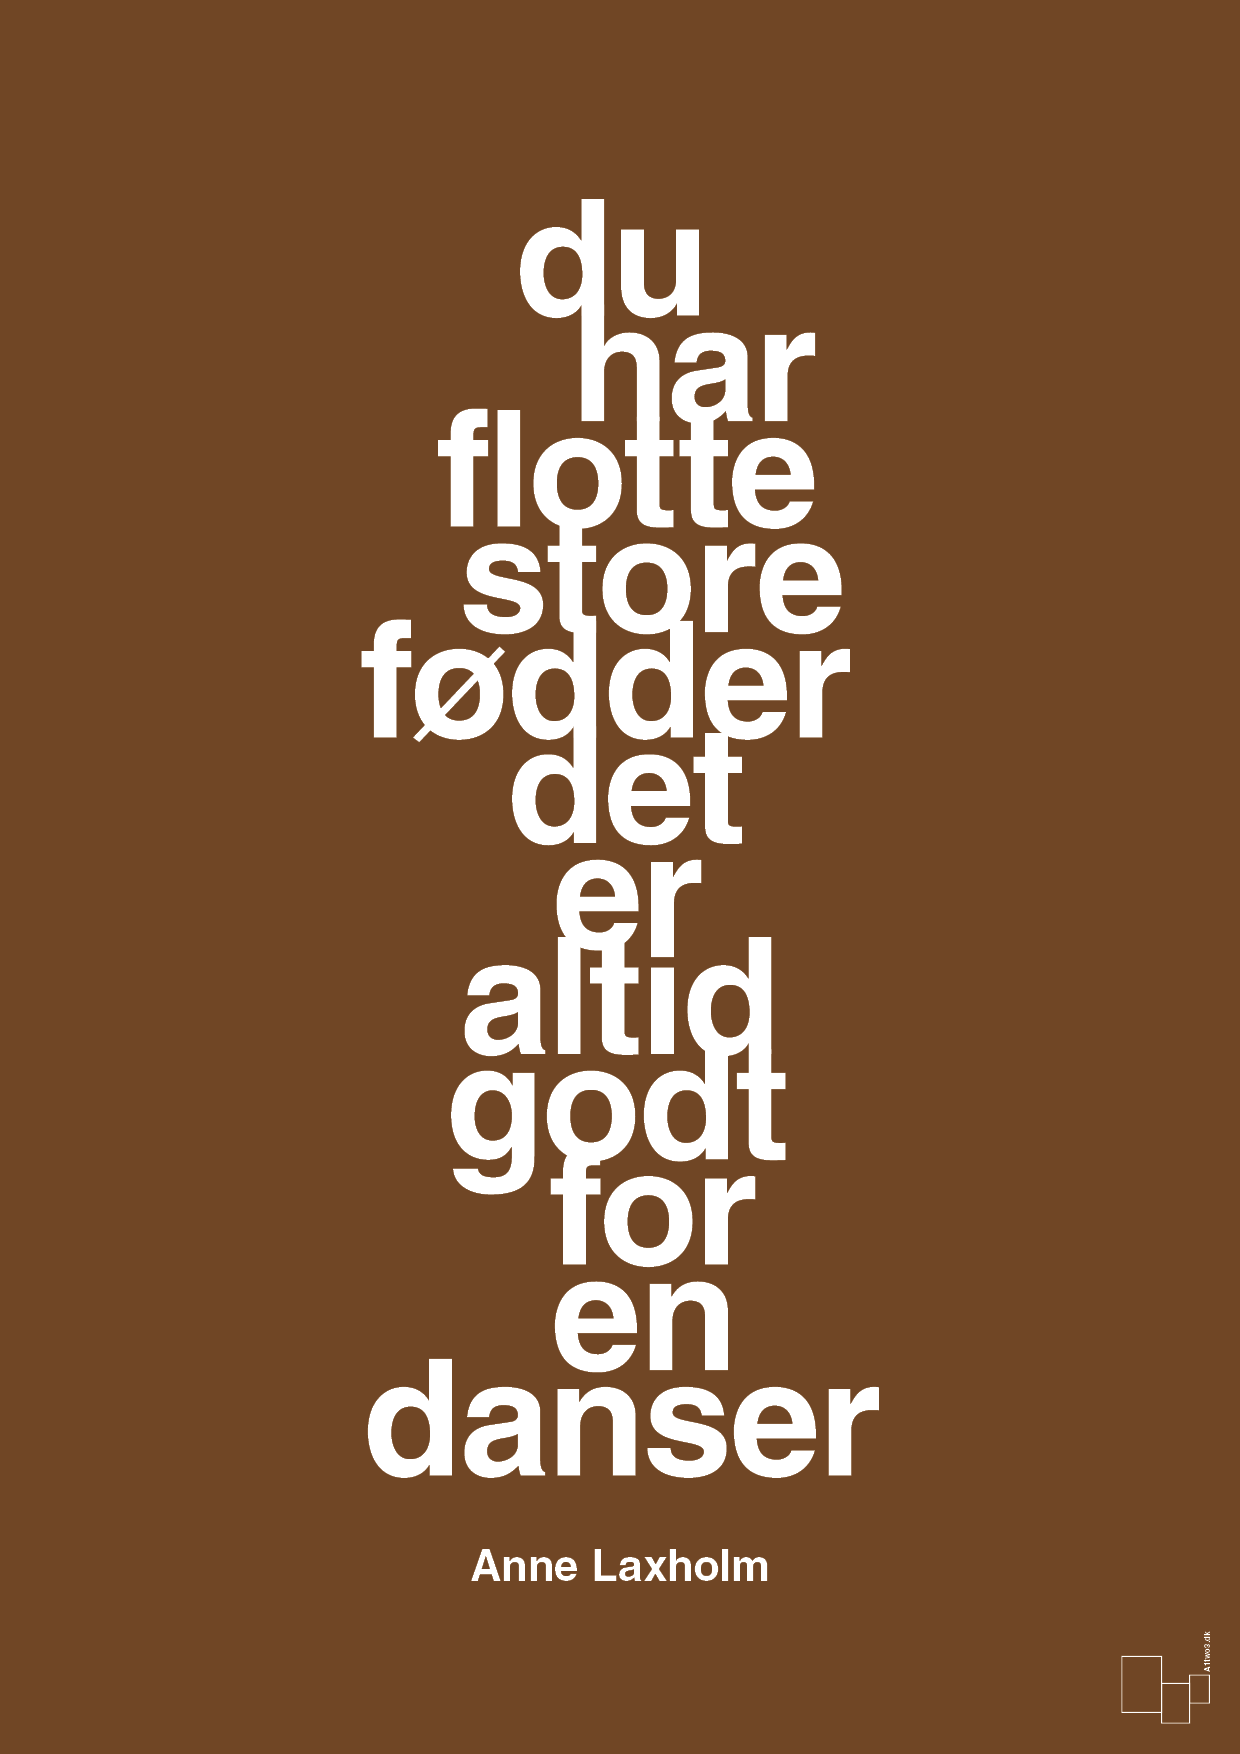 du har flotte store fødder det er altid godt for en danser - Plakat med Citater i Dark Brown